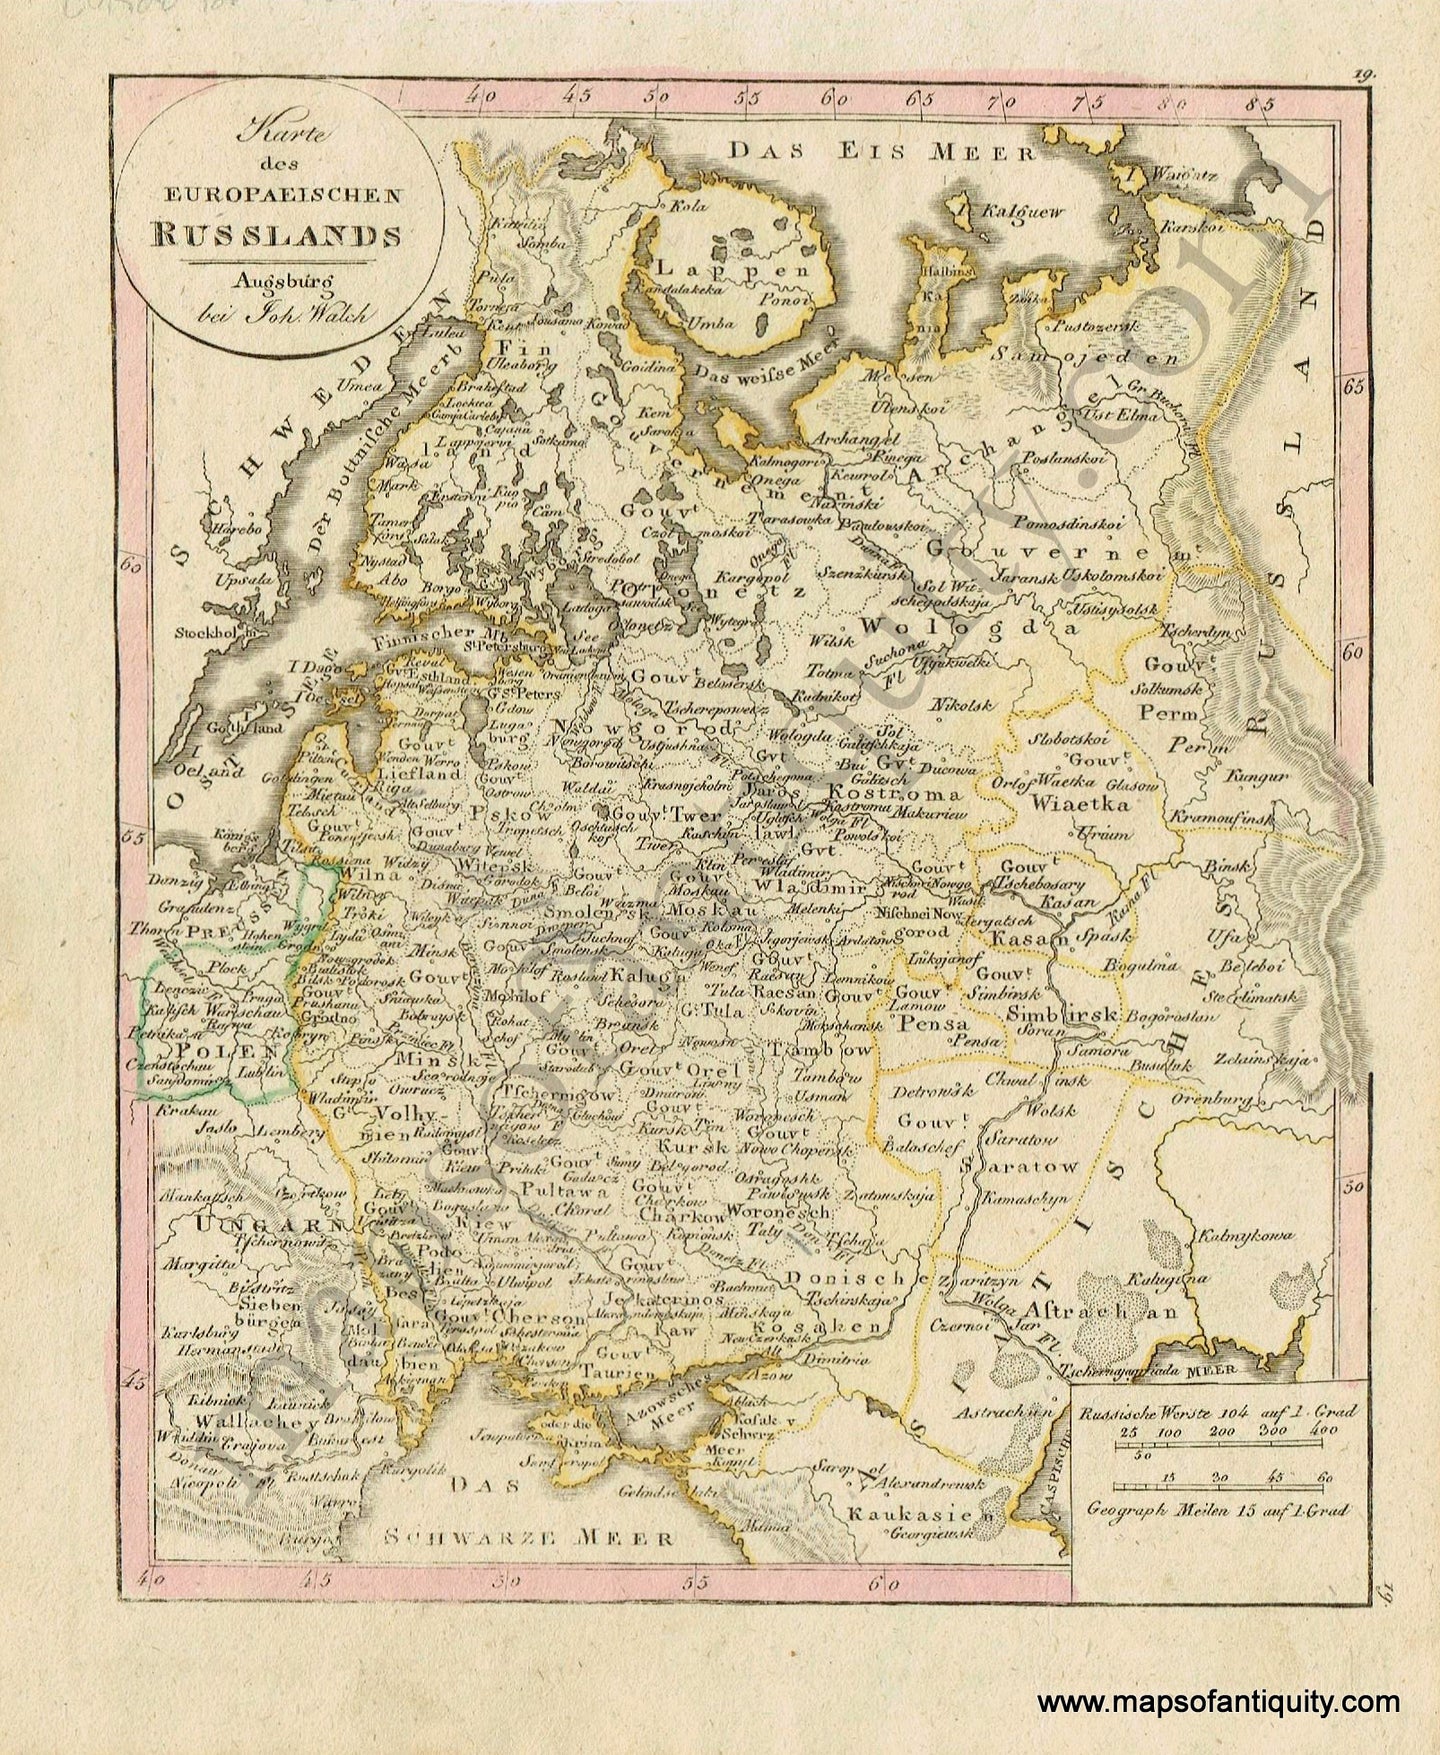 Antique-Map-Karte-des-Europaeischen-Russlands-European-Russia-in-Europe-German-Walch-Neuester-Schul-Atlass-1826-1820s-Early-19th-Century-Maps-of-Antiquity